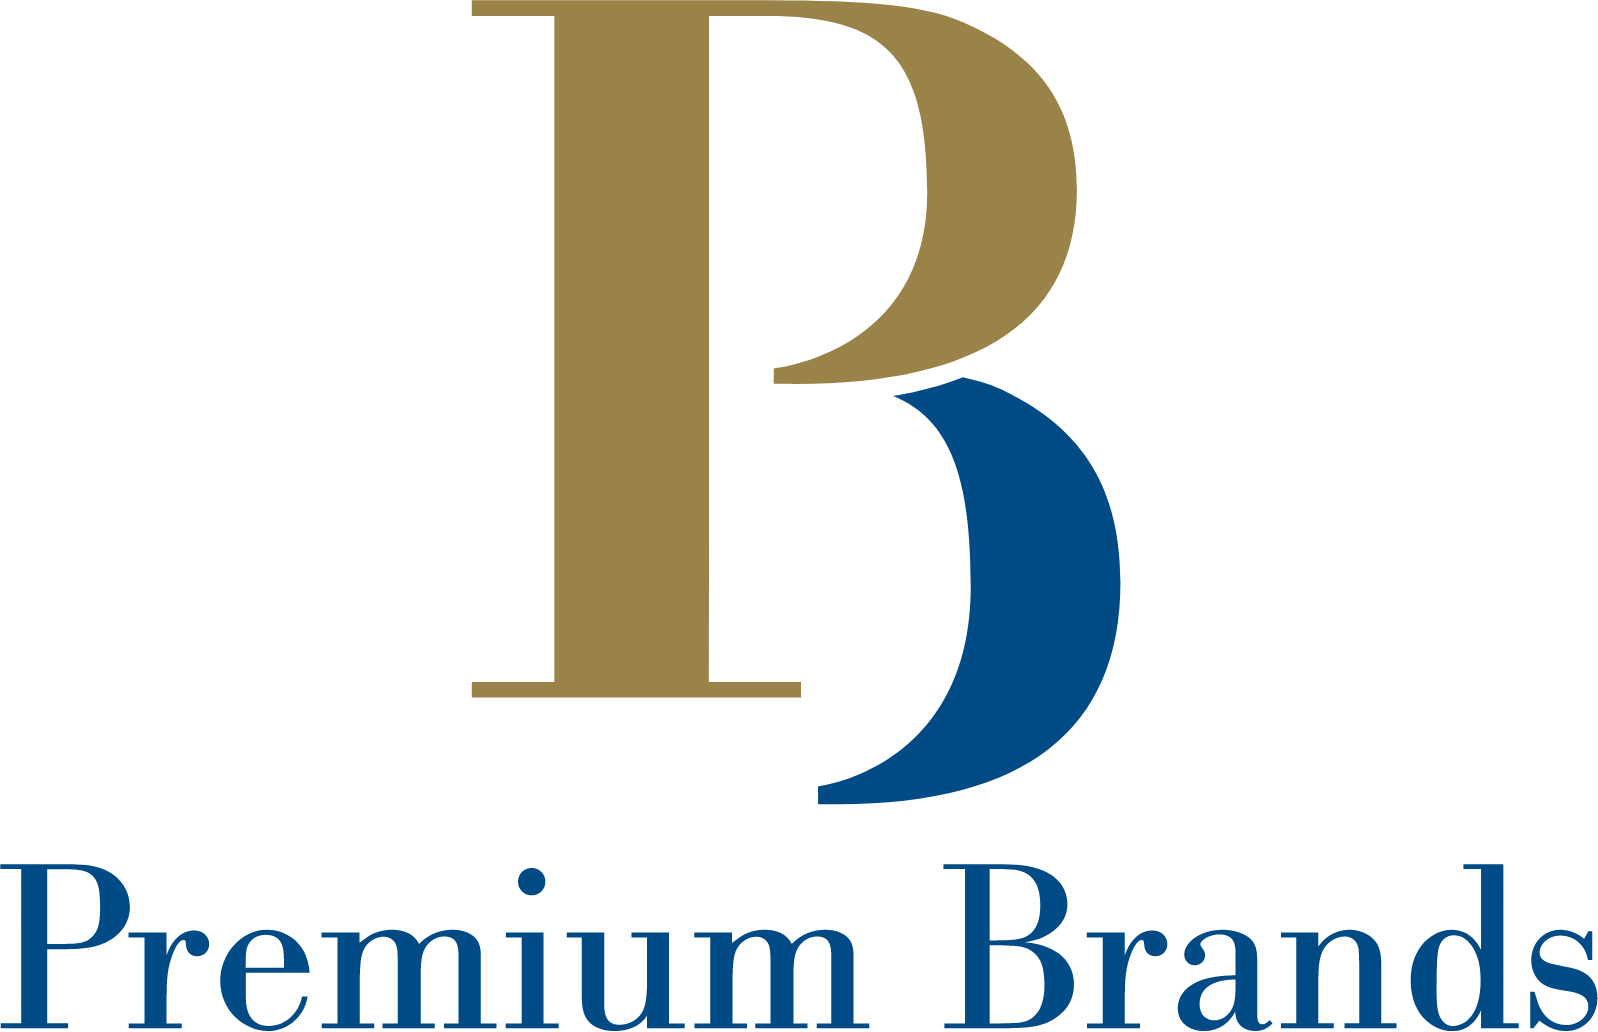 Premium Brands logo large (transparent PNG)